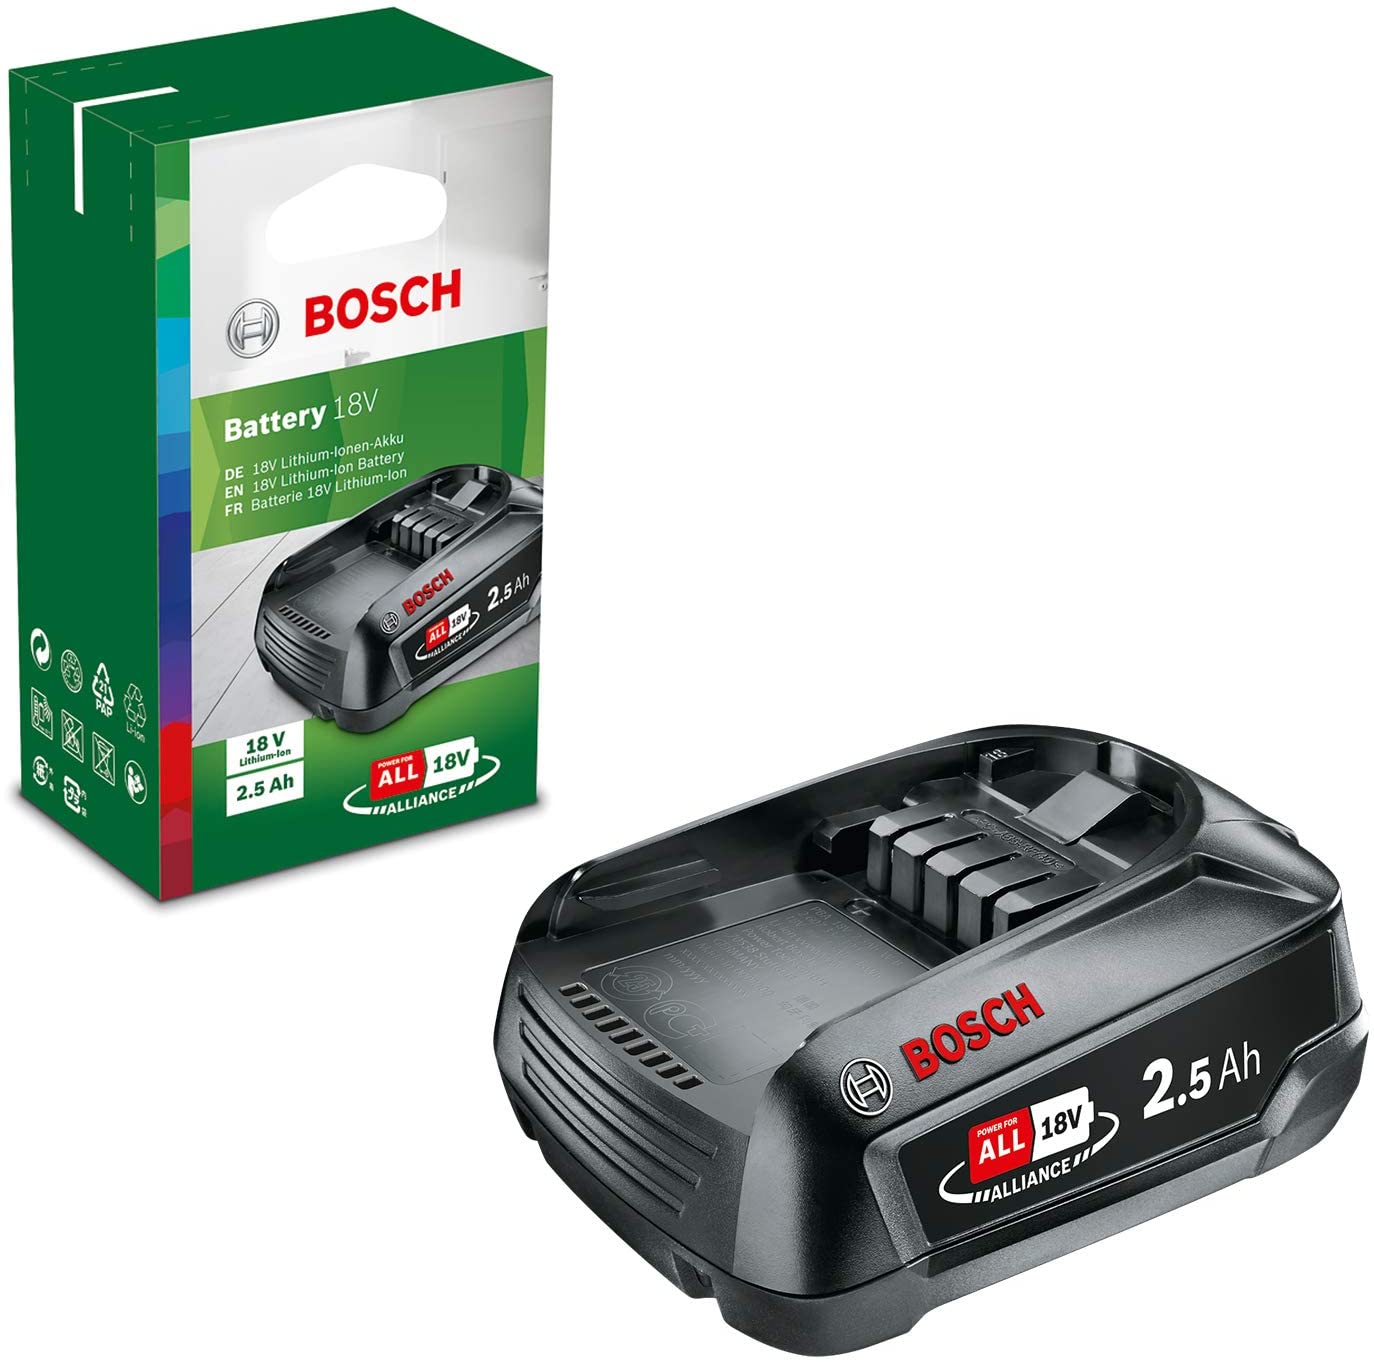 BOSCH Battery pack PBA 18V 2.5Ah W-B-1 600 A00 5B0 - Elmers Hardware